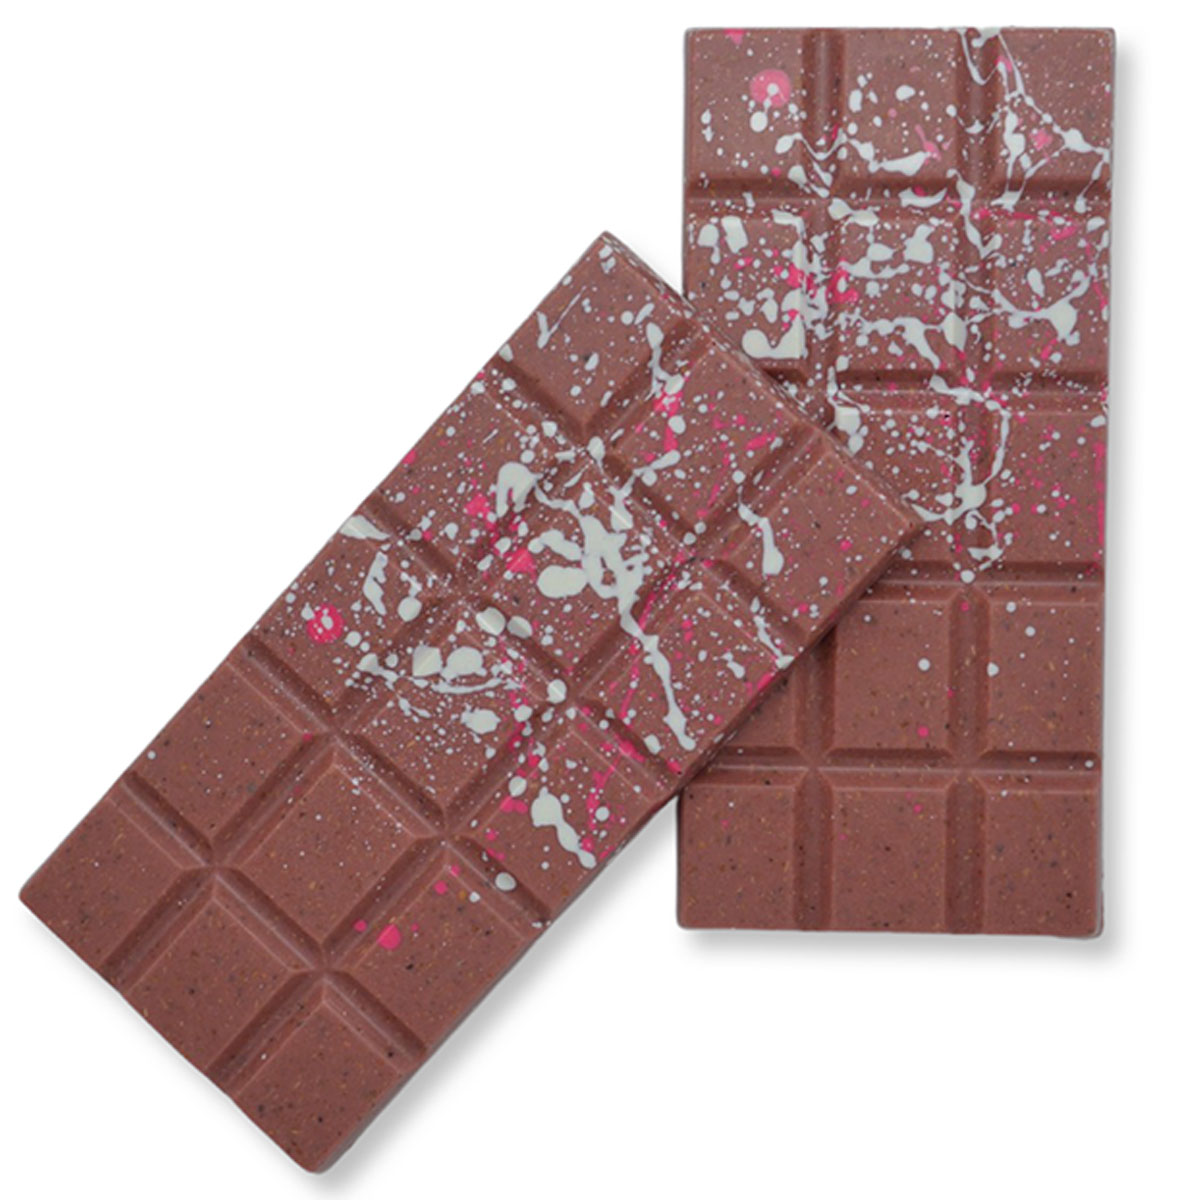 Chocolove Ruby Cacao Bars